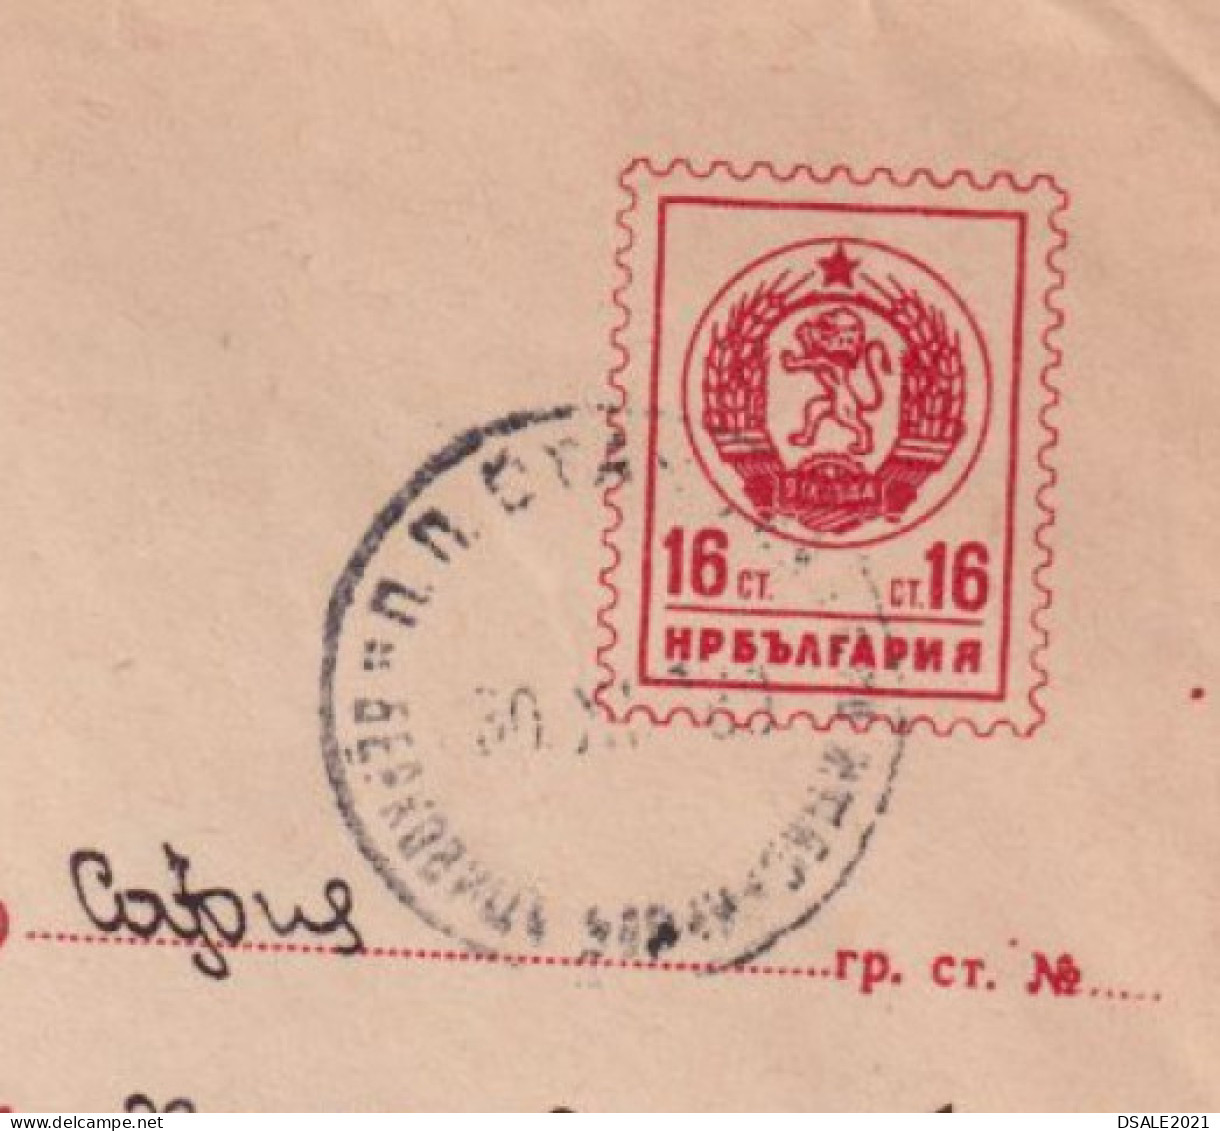 Bulgaria 1960 Postal Stationery Cover PSE, Entier, PARACHUTING, Sent Via Railway TPO (BERKOVITZA-BOICHINOVCI) (ds1071) - Covers